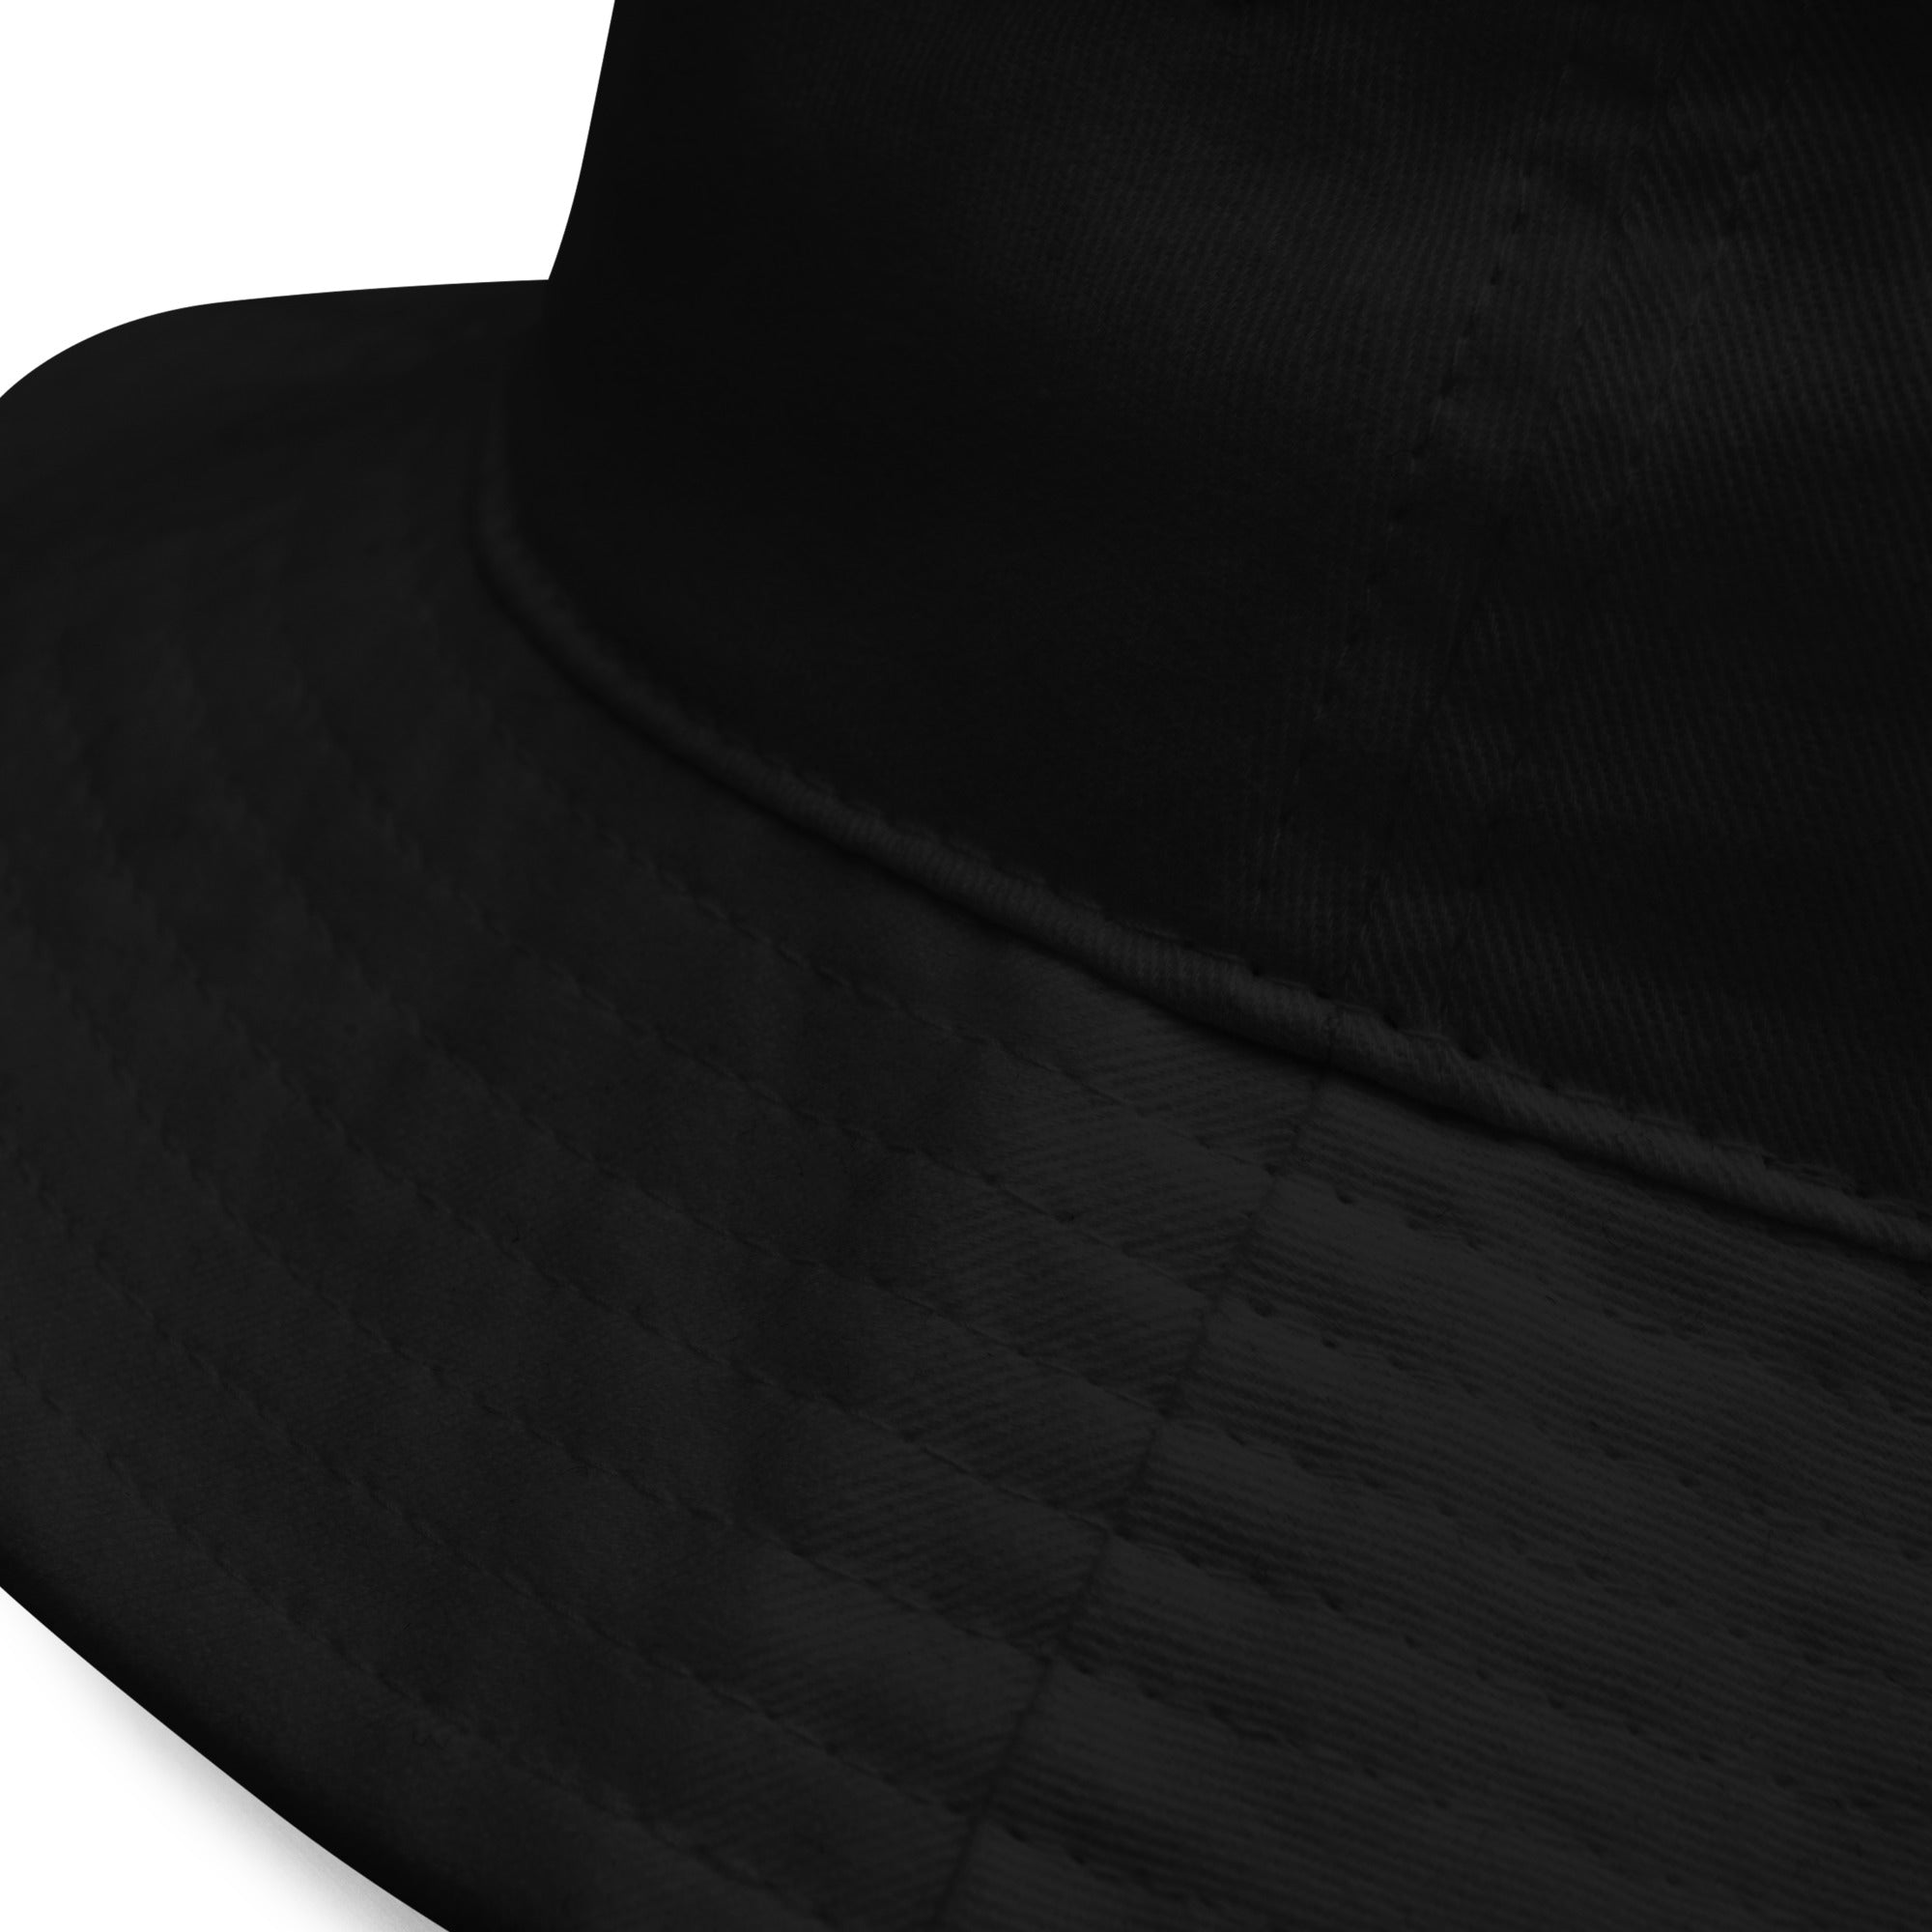 Clishirt© Embroidered Black Fish Bucket Hat